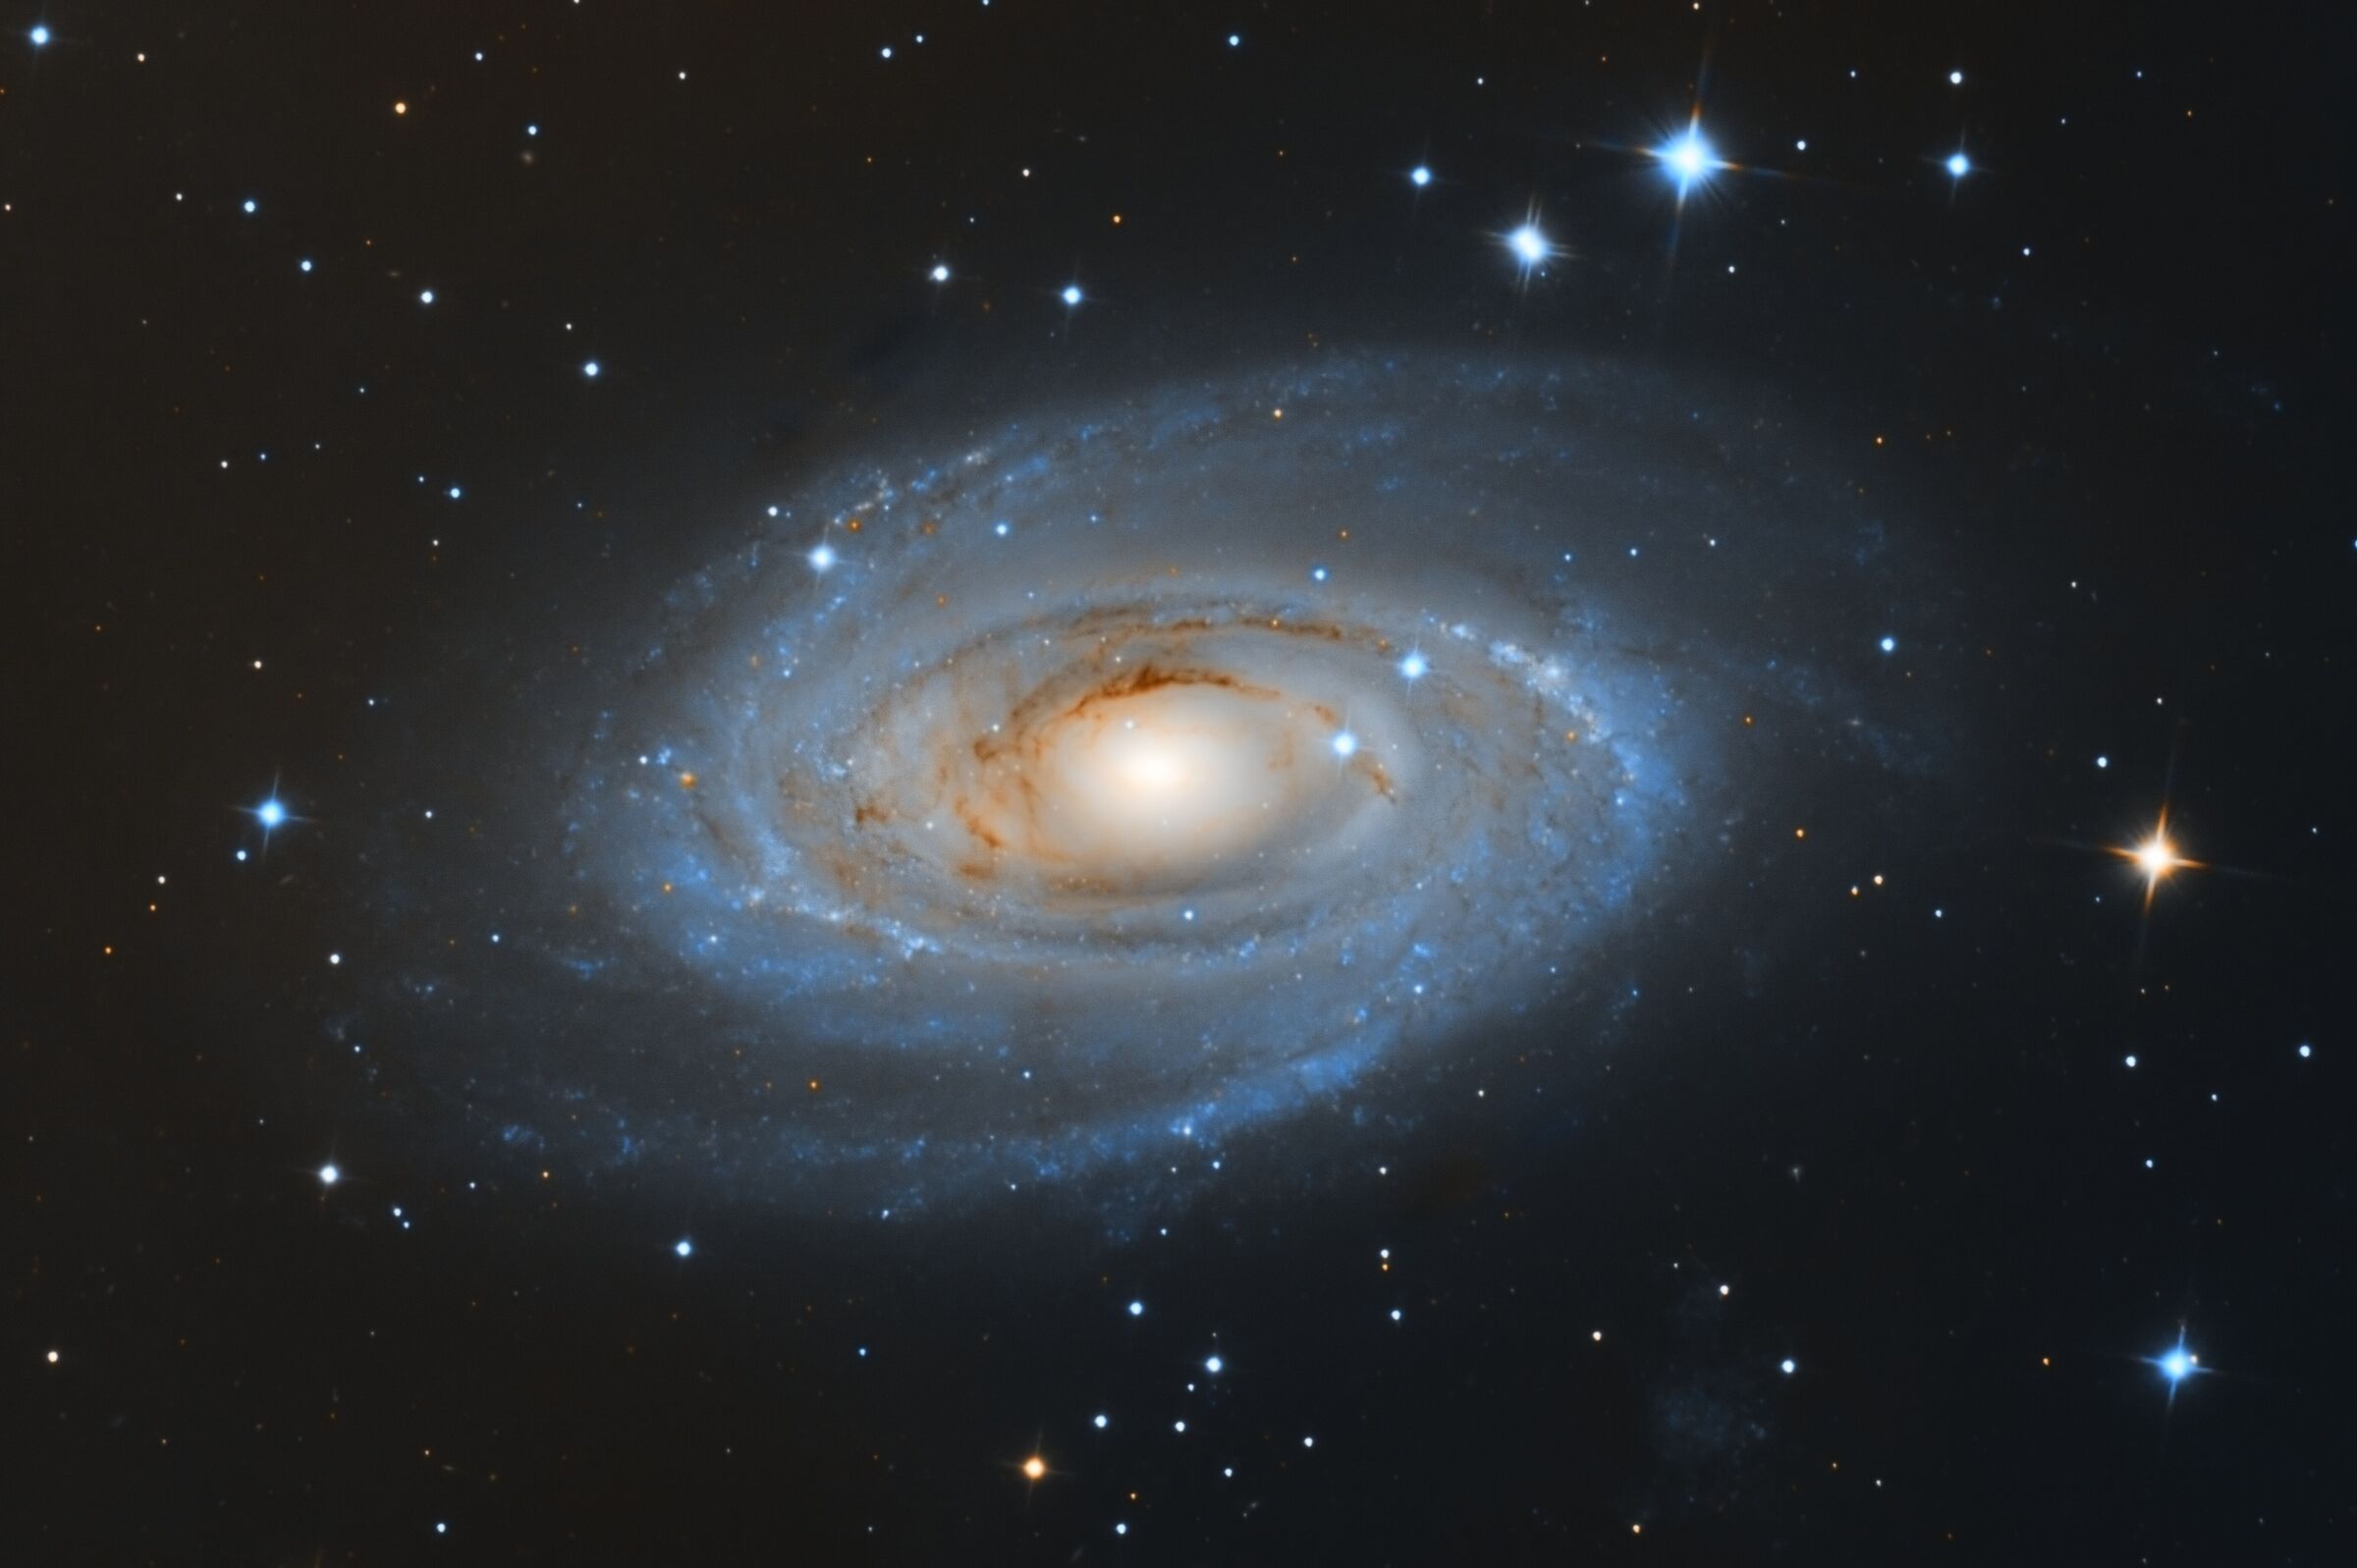 Bode Galaxy - M81...